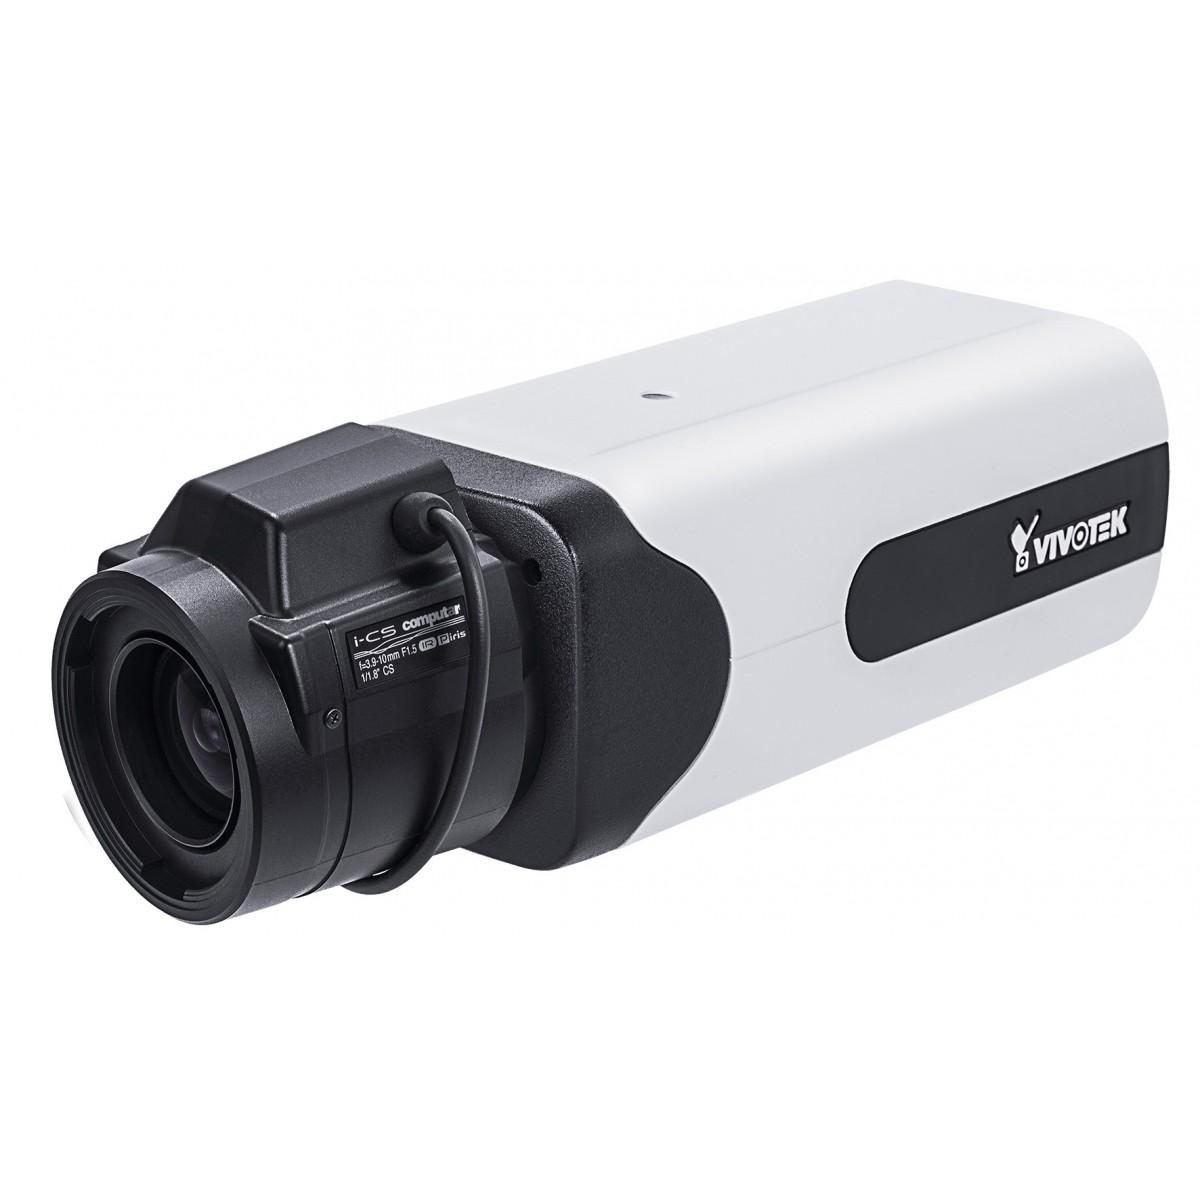 VIVOTEK IP9191-HT - IP security camera - Outdoor - Wired - Digital PTZ - CE - LVD - FCC Class B - VCCI - C-Tick - UL - Bullet